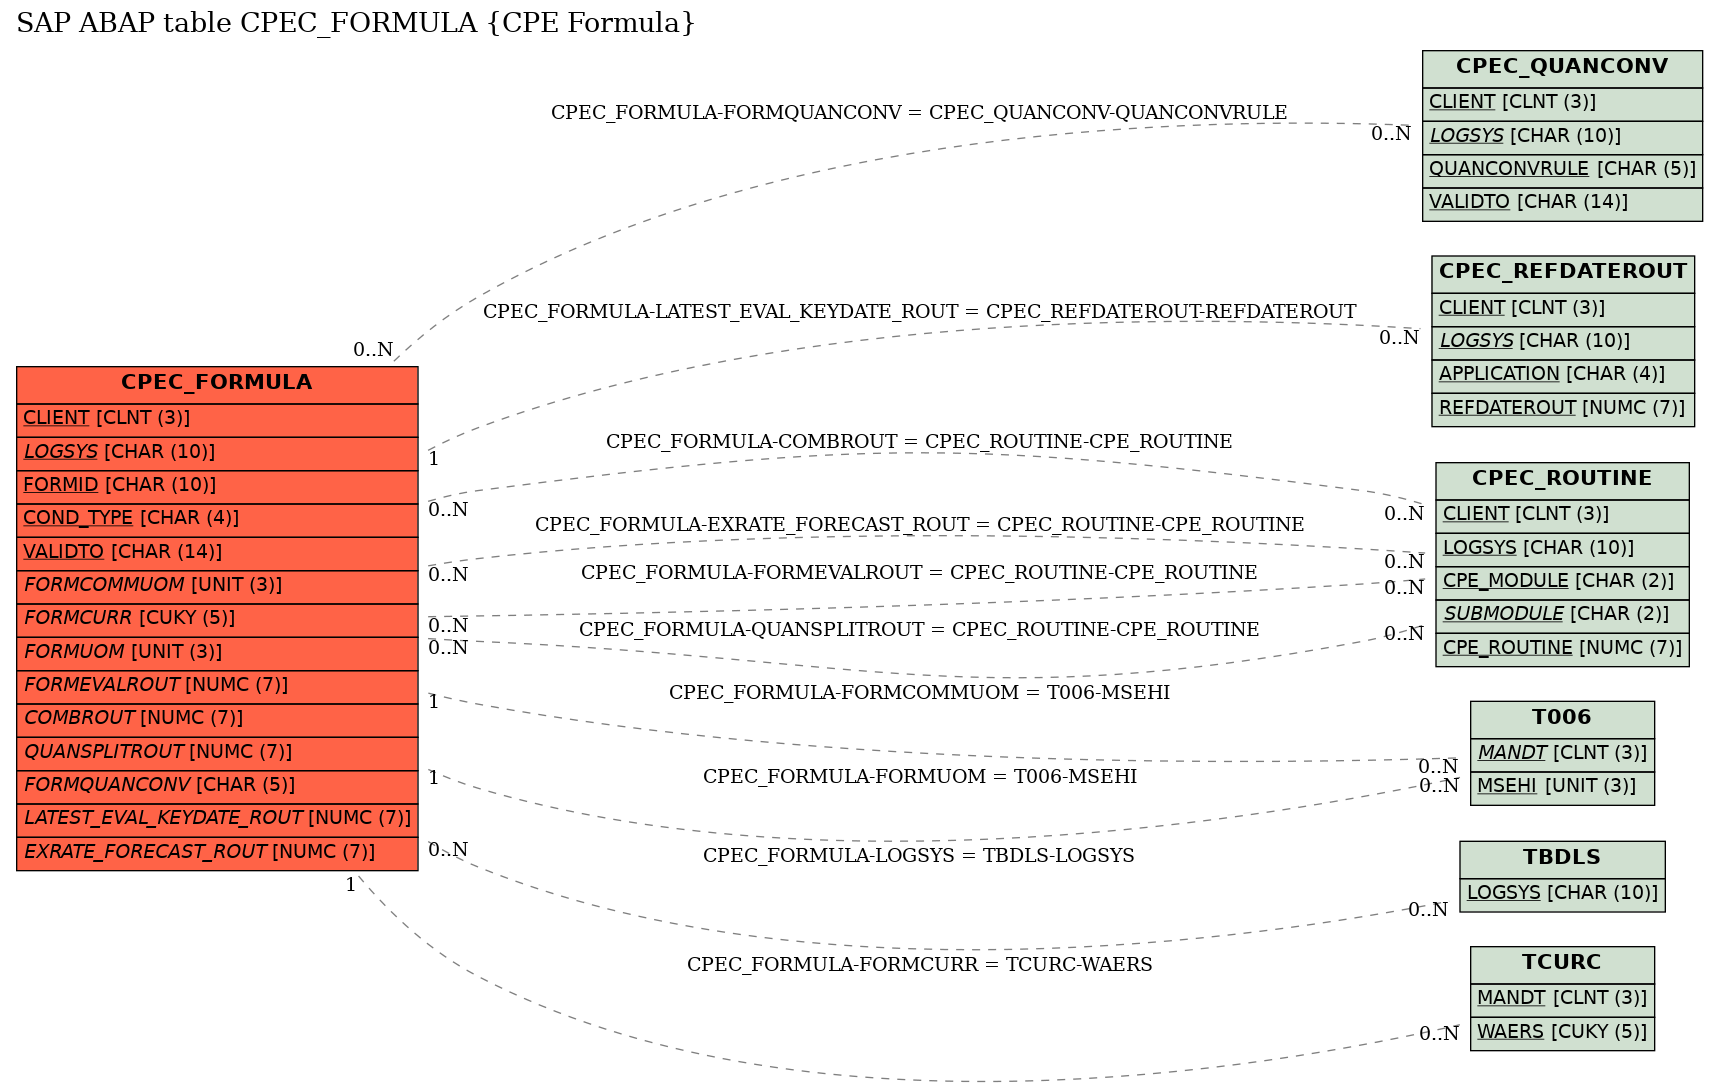 E-R Diagram for table CPEC_FORMULA (CPE Formula)